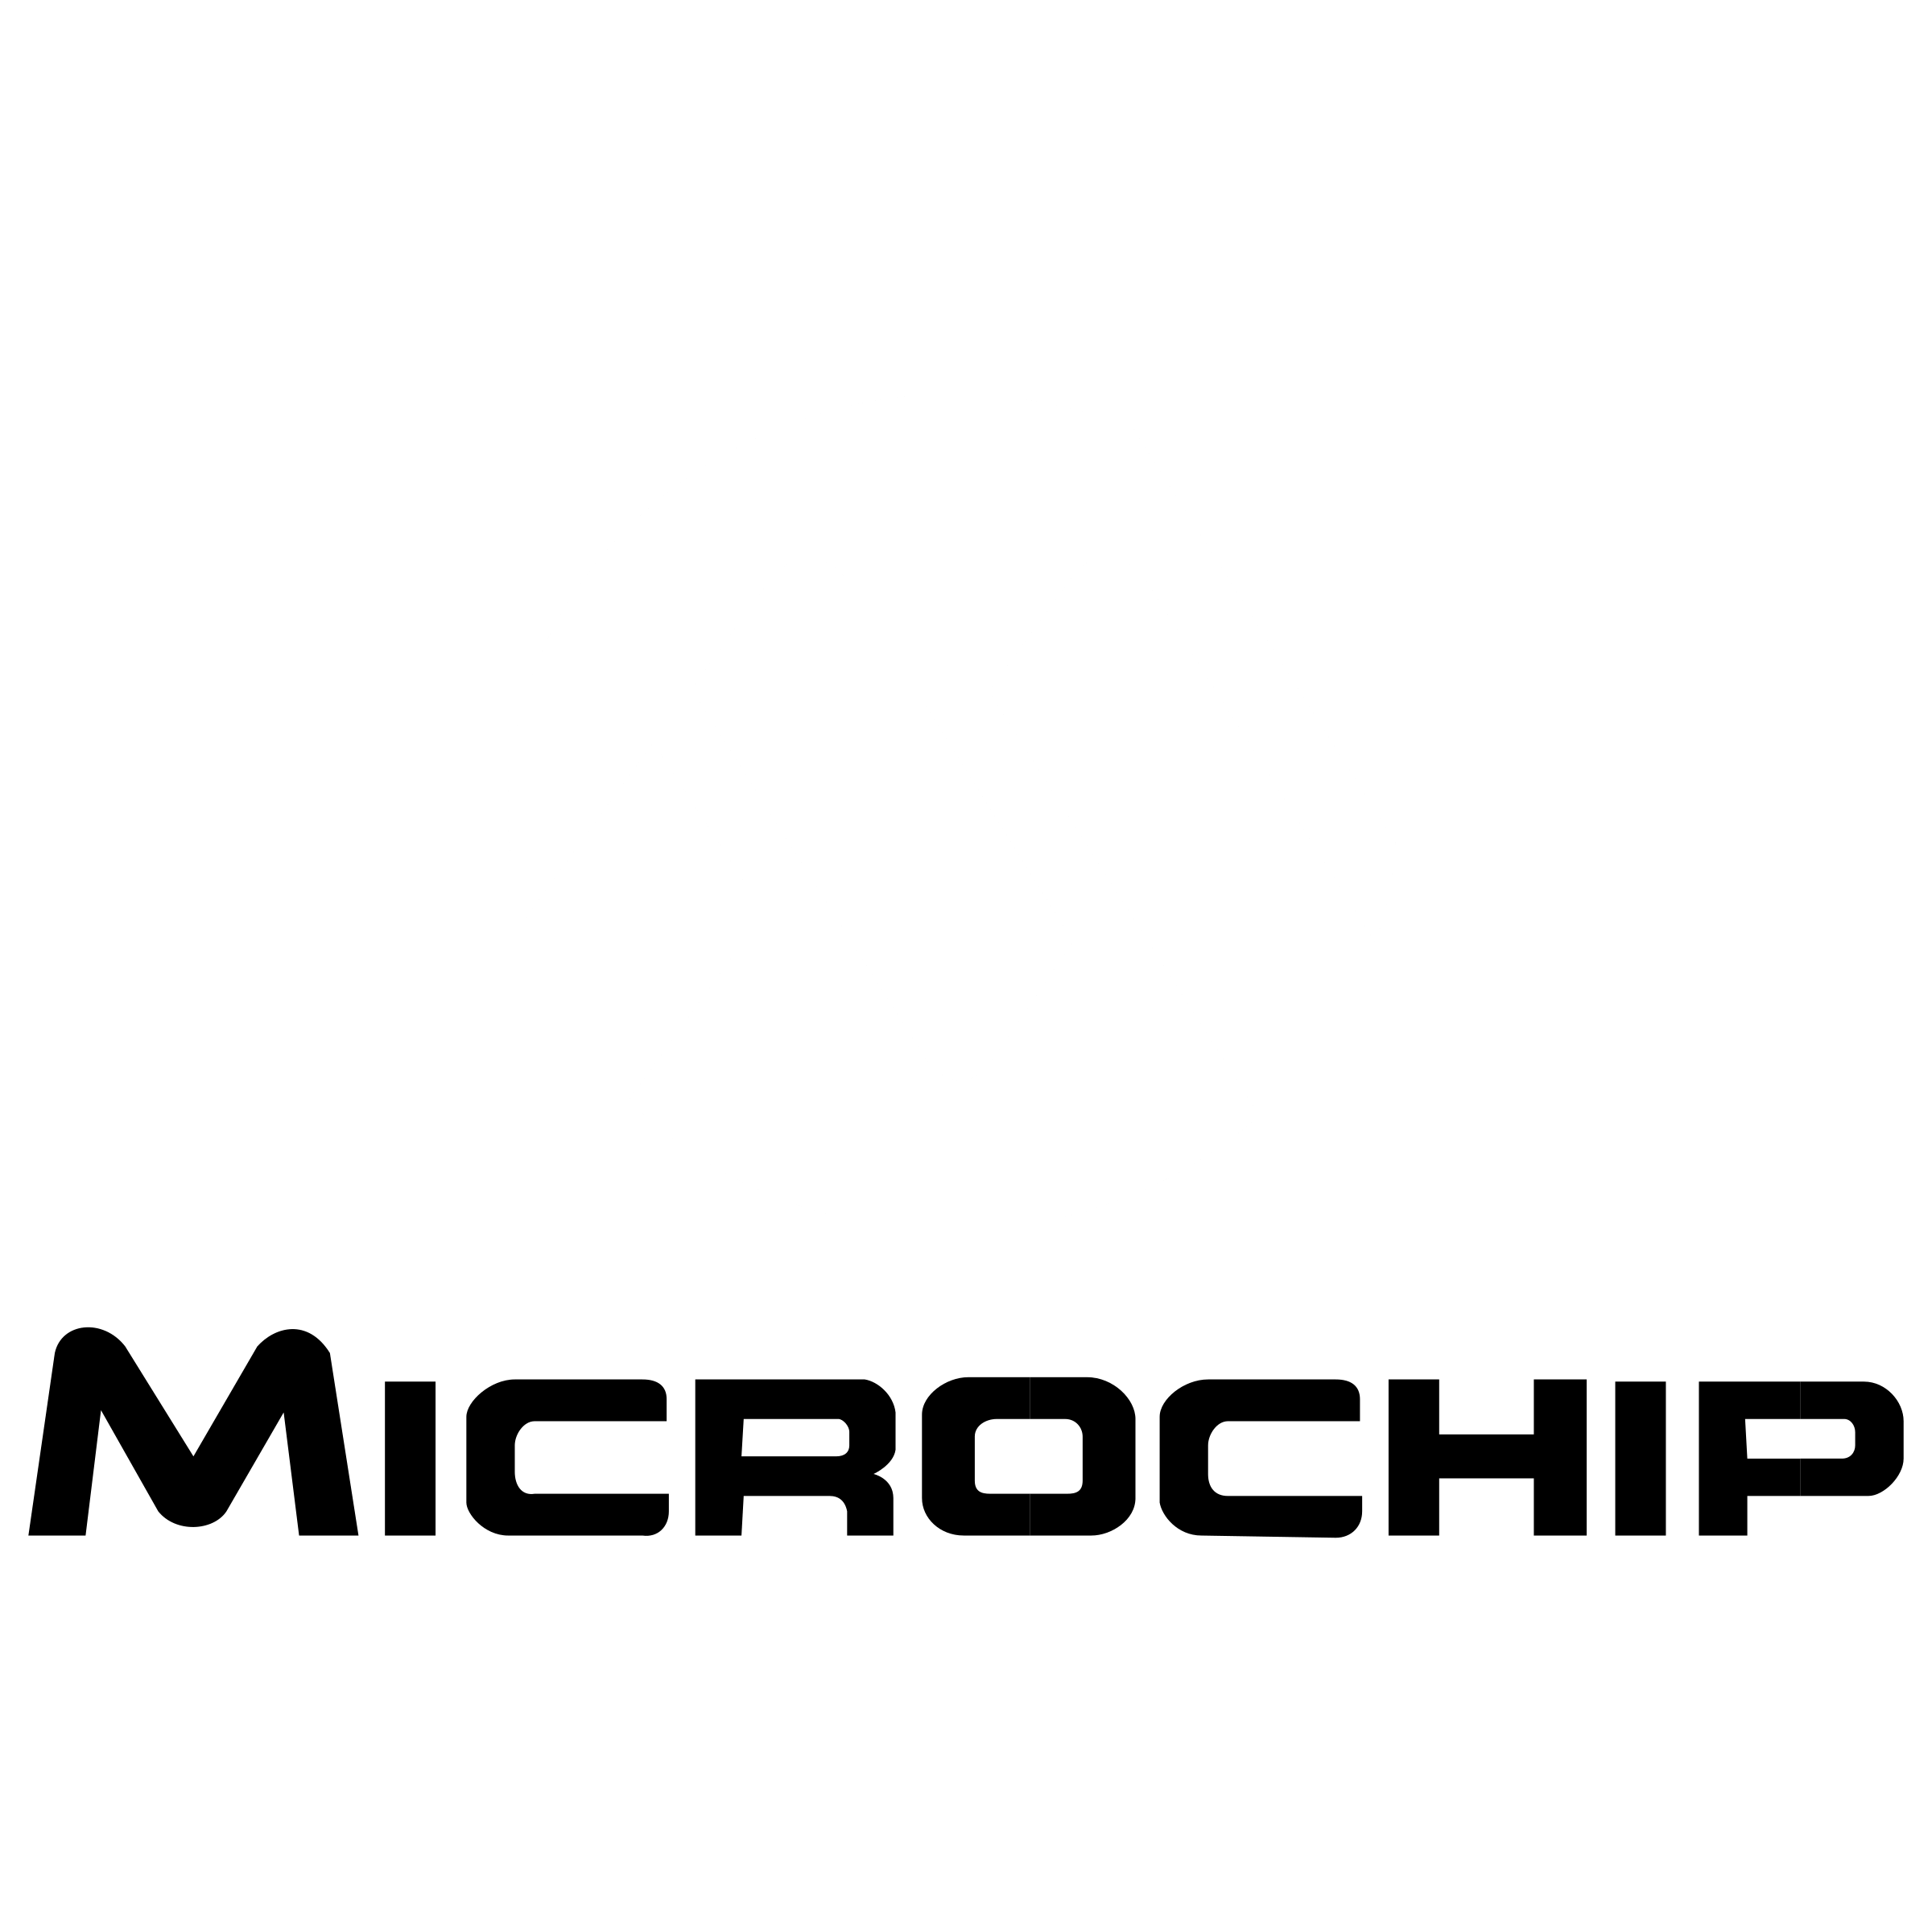 Microchip Logo - Microchip Logo PNG Transparent & SVG Vector - Freebie Supply